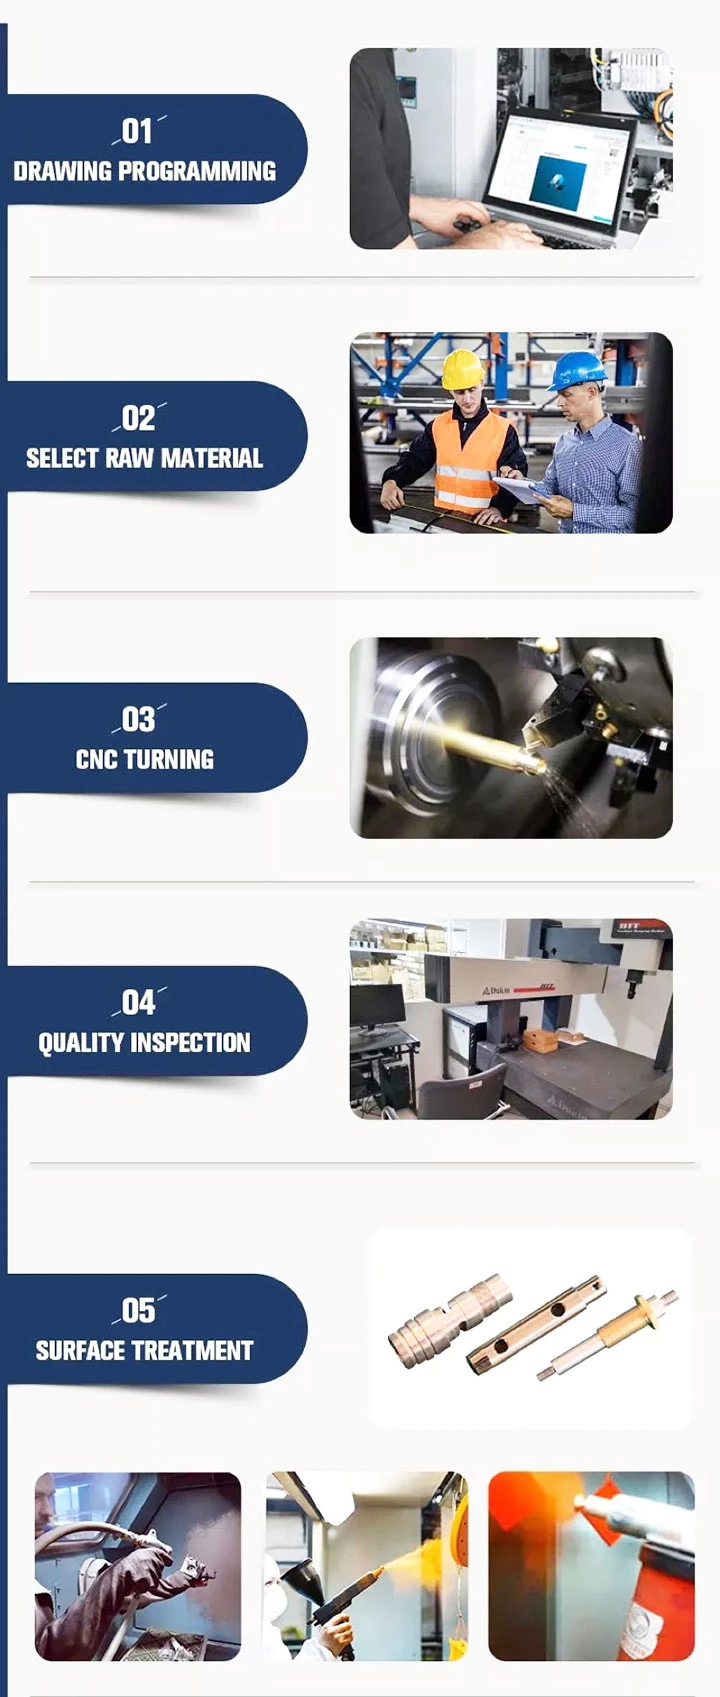 Custom Type CNC Turning Shaft Adapter for Motor Hydraulic Motor Extension Shaft